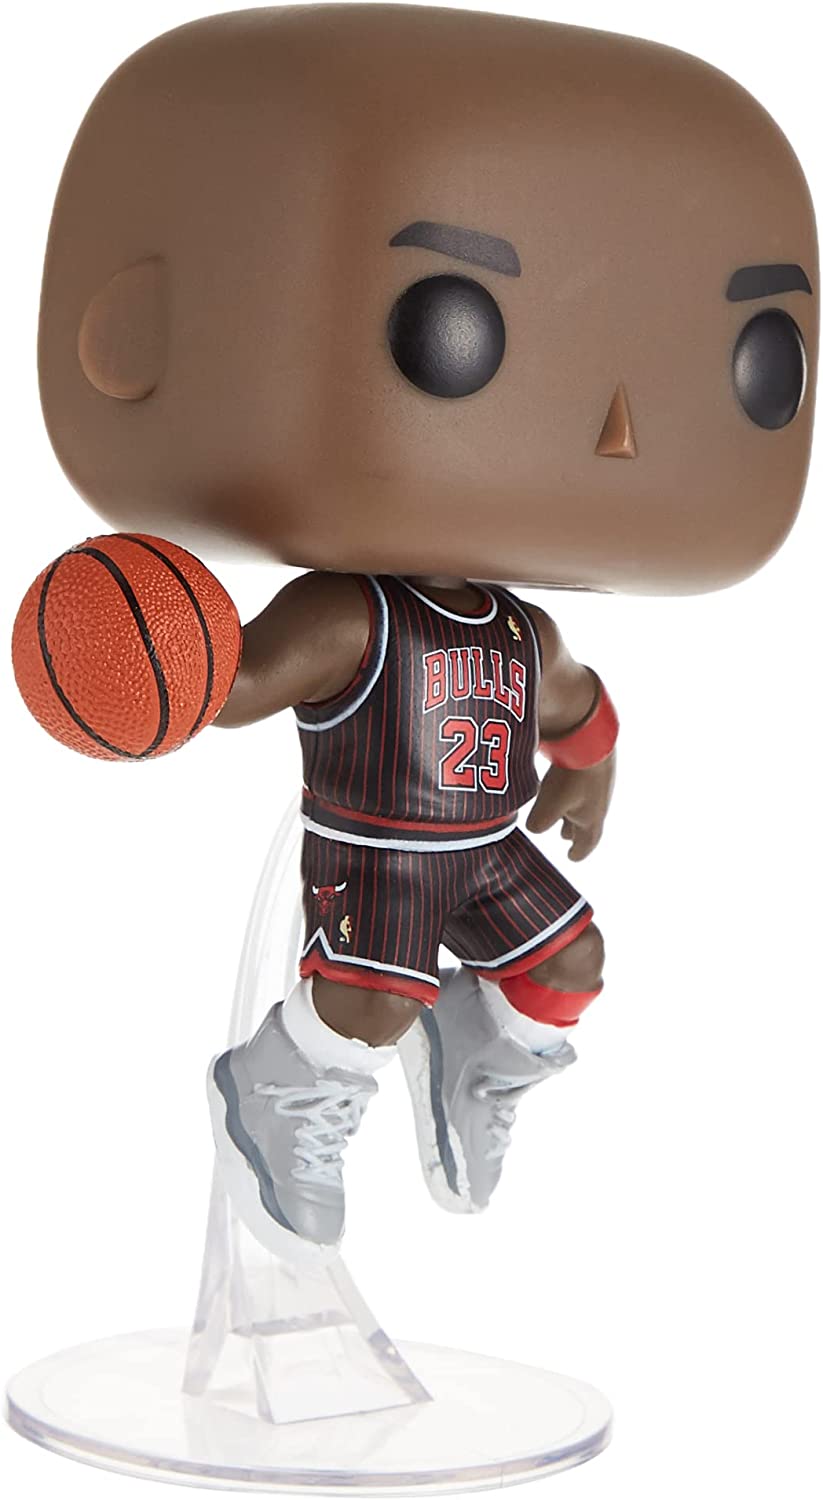 Chicago Bulls Michael Jordan Exclusive Funko 60463 Pop! Vinyl Nr. 126